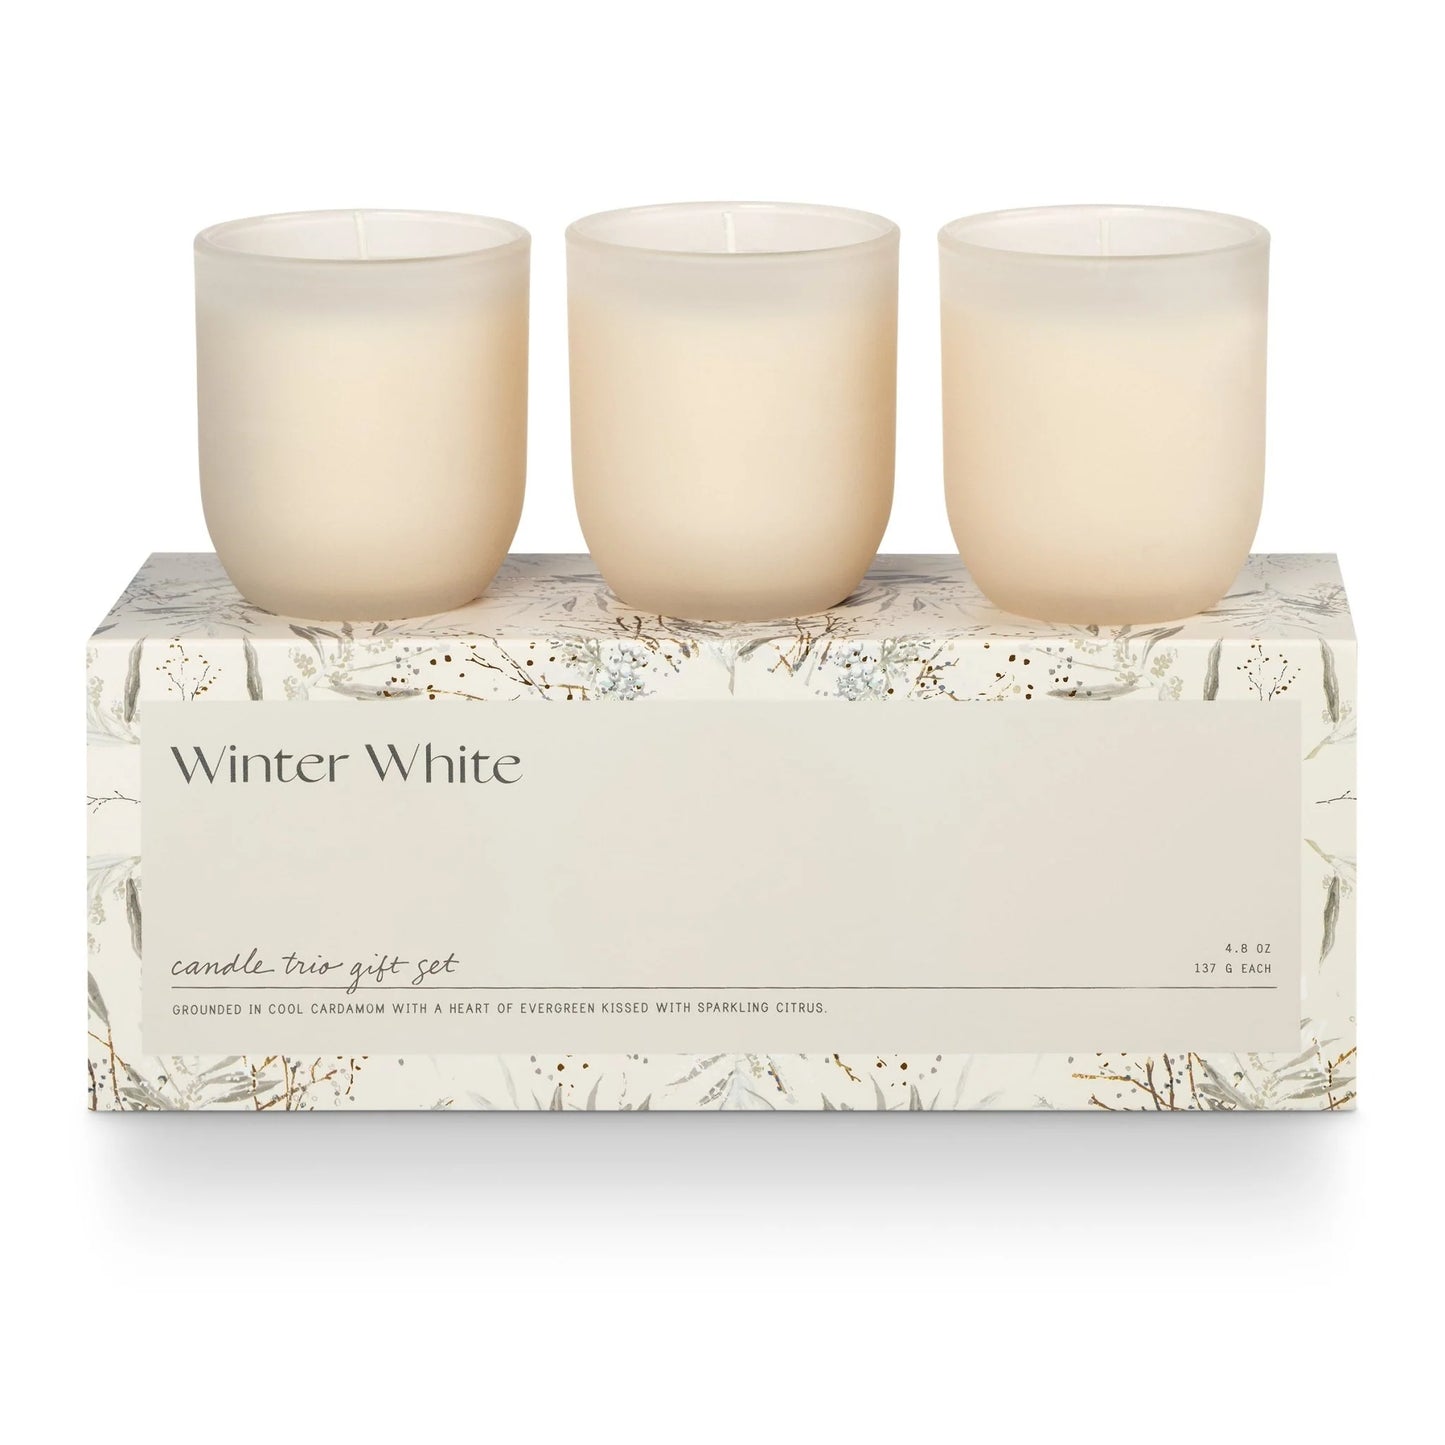 Winter White Candle Trio Gift Set